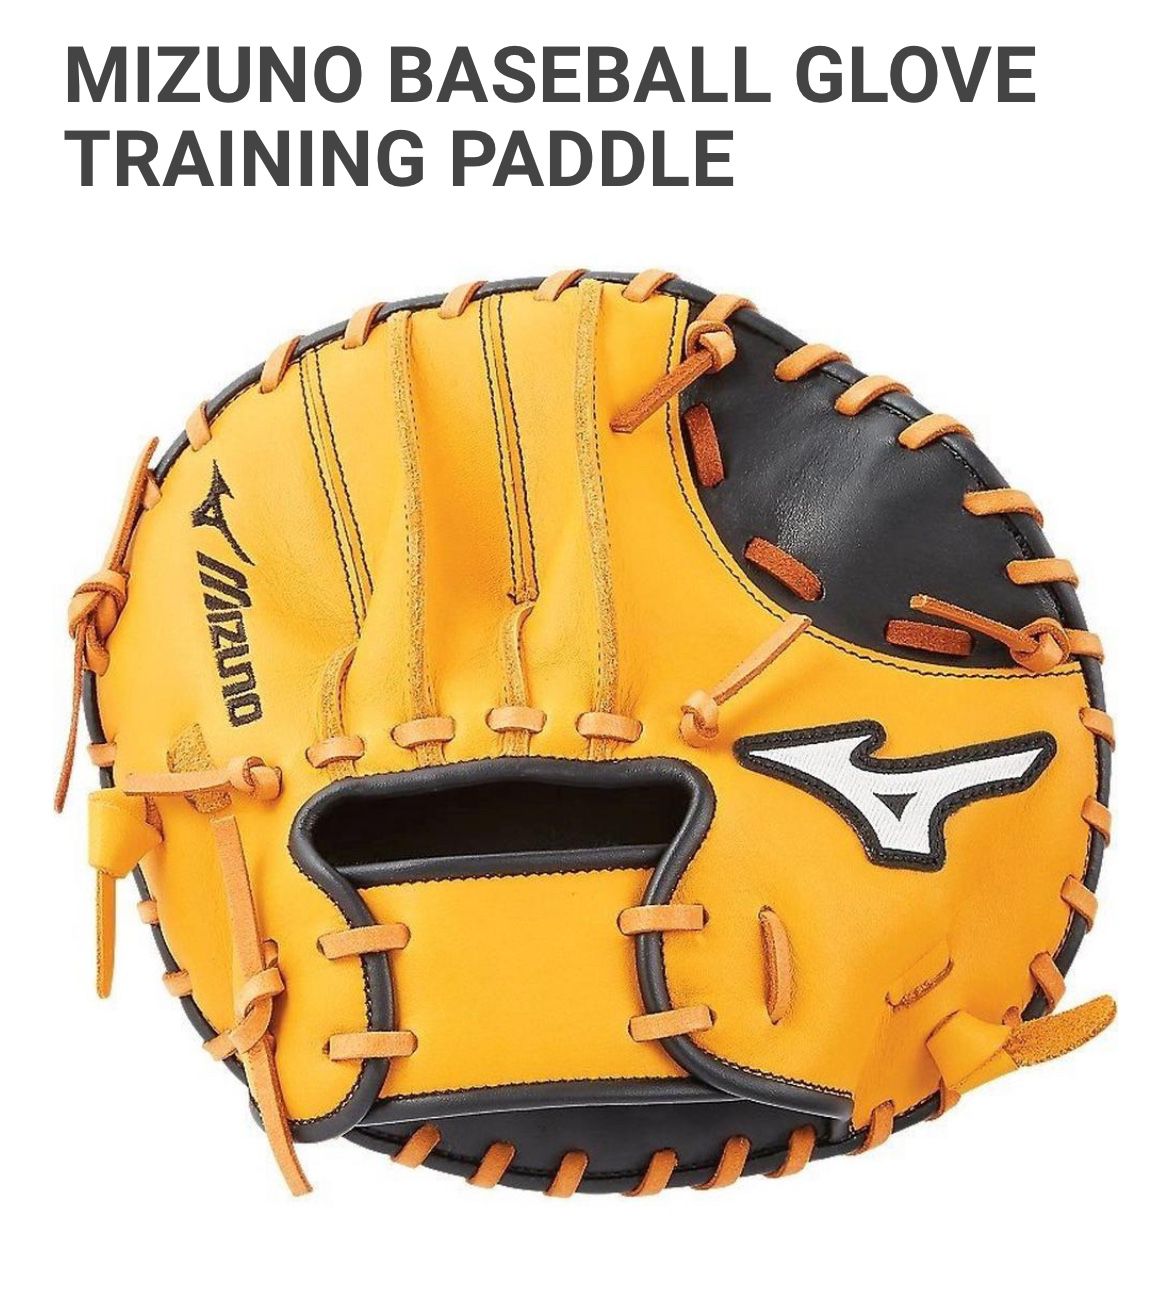 Mizuno Baseball Glove Training Paddle